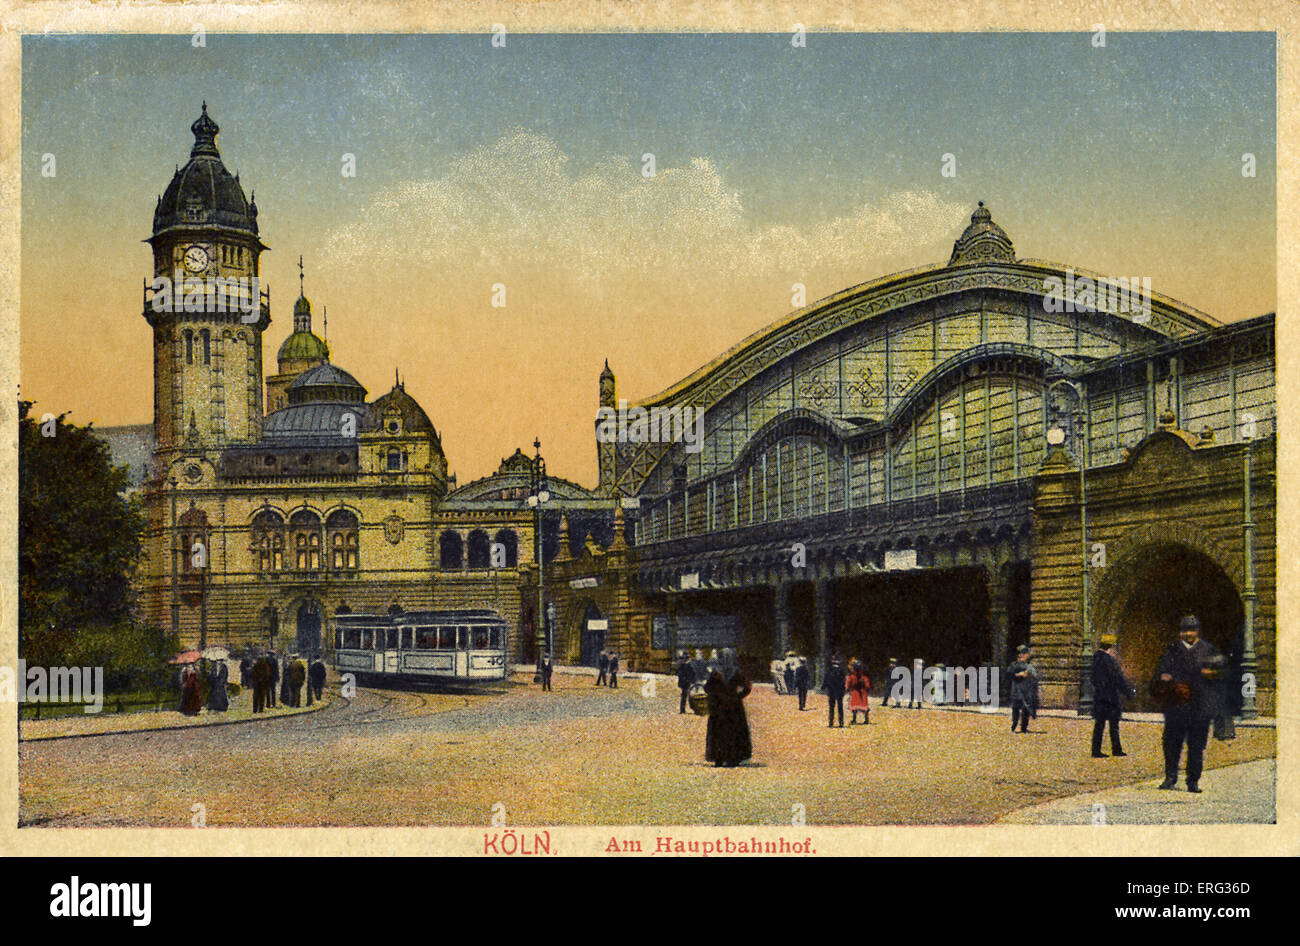 Cologne, Germany, early 20th century. Am Hauptbahnhof (main railway station).  Postcard. Stock Photo